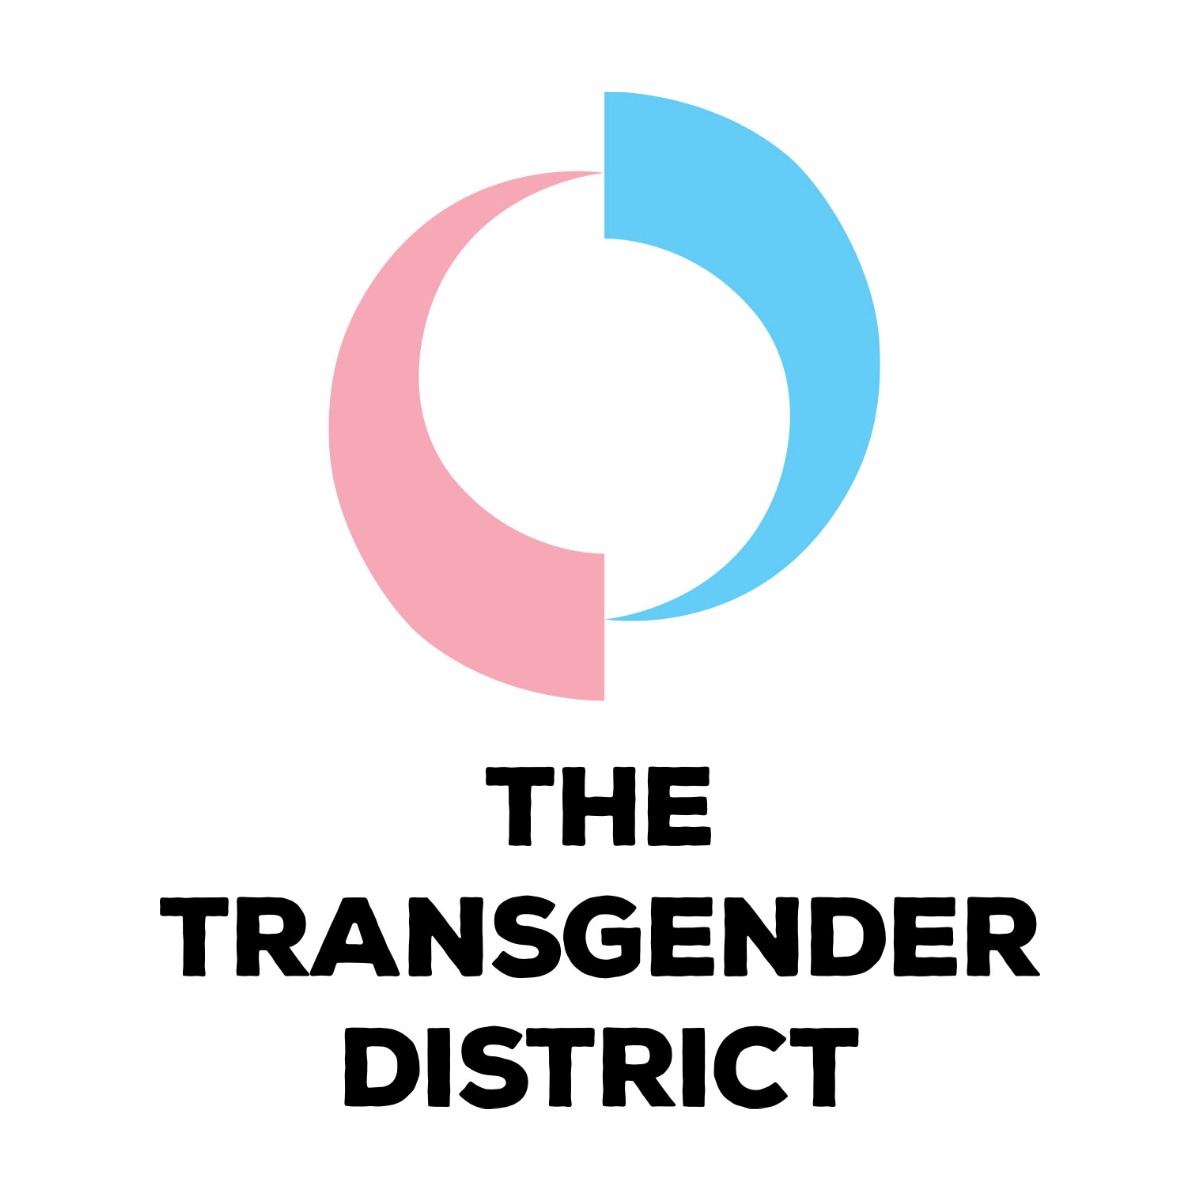 LGBTQ Organization in San Diego California - Transgender District